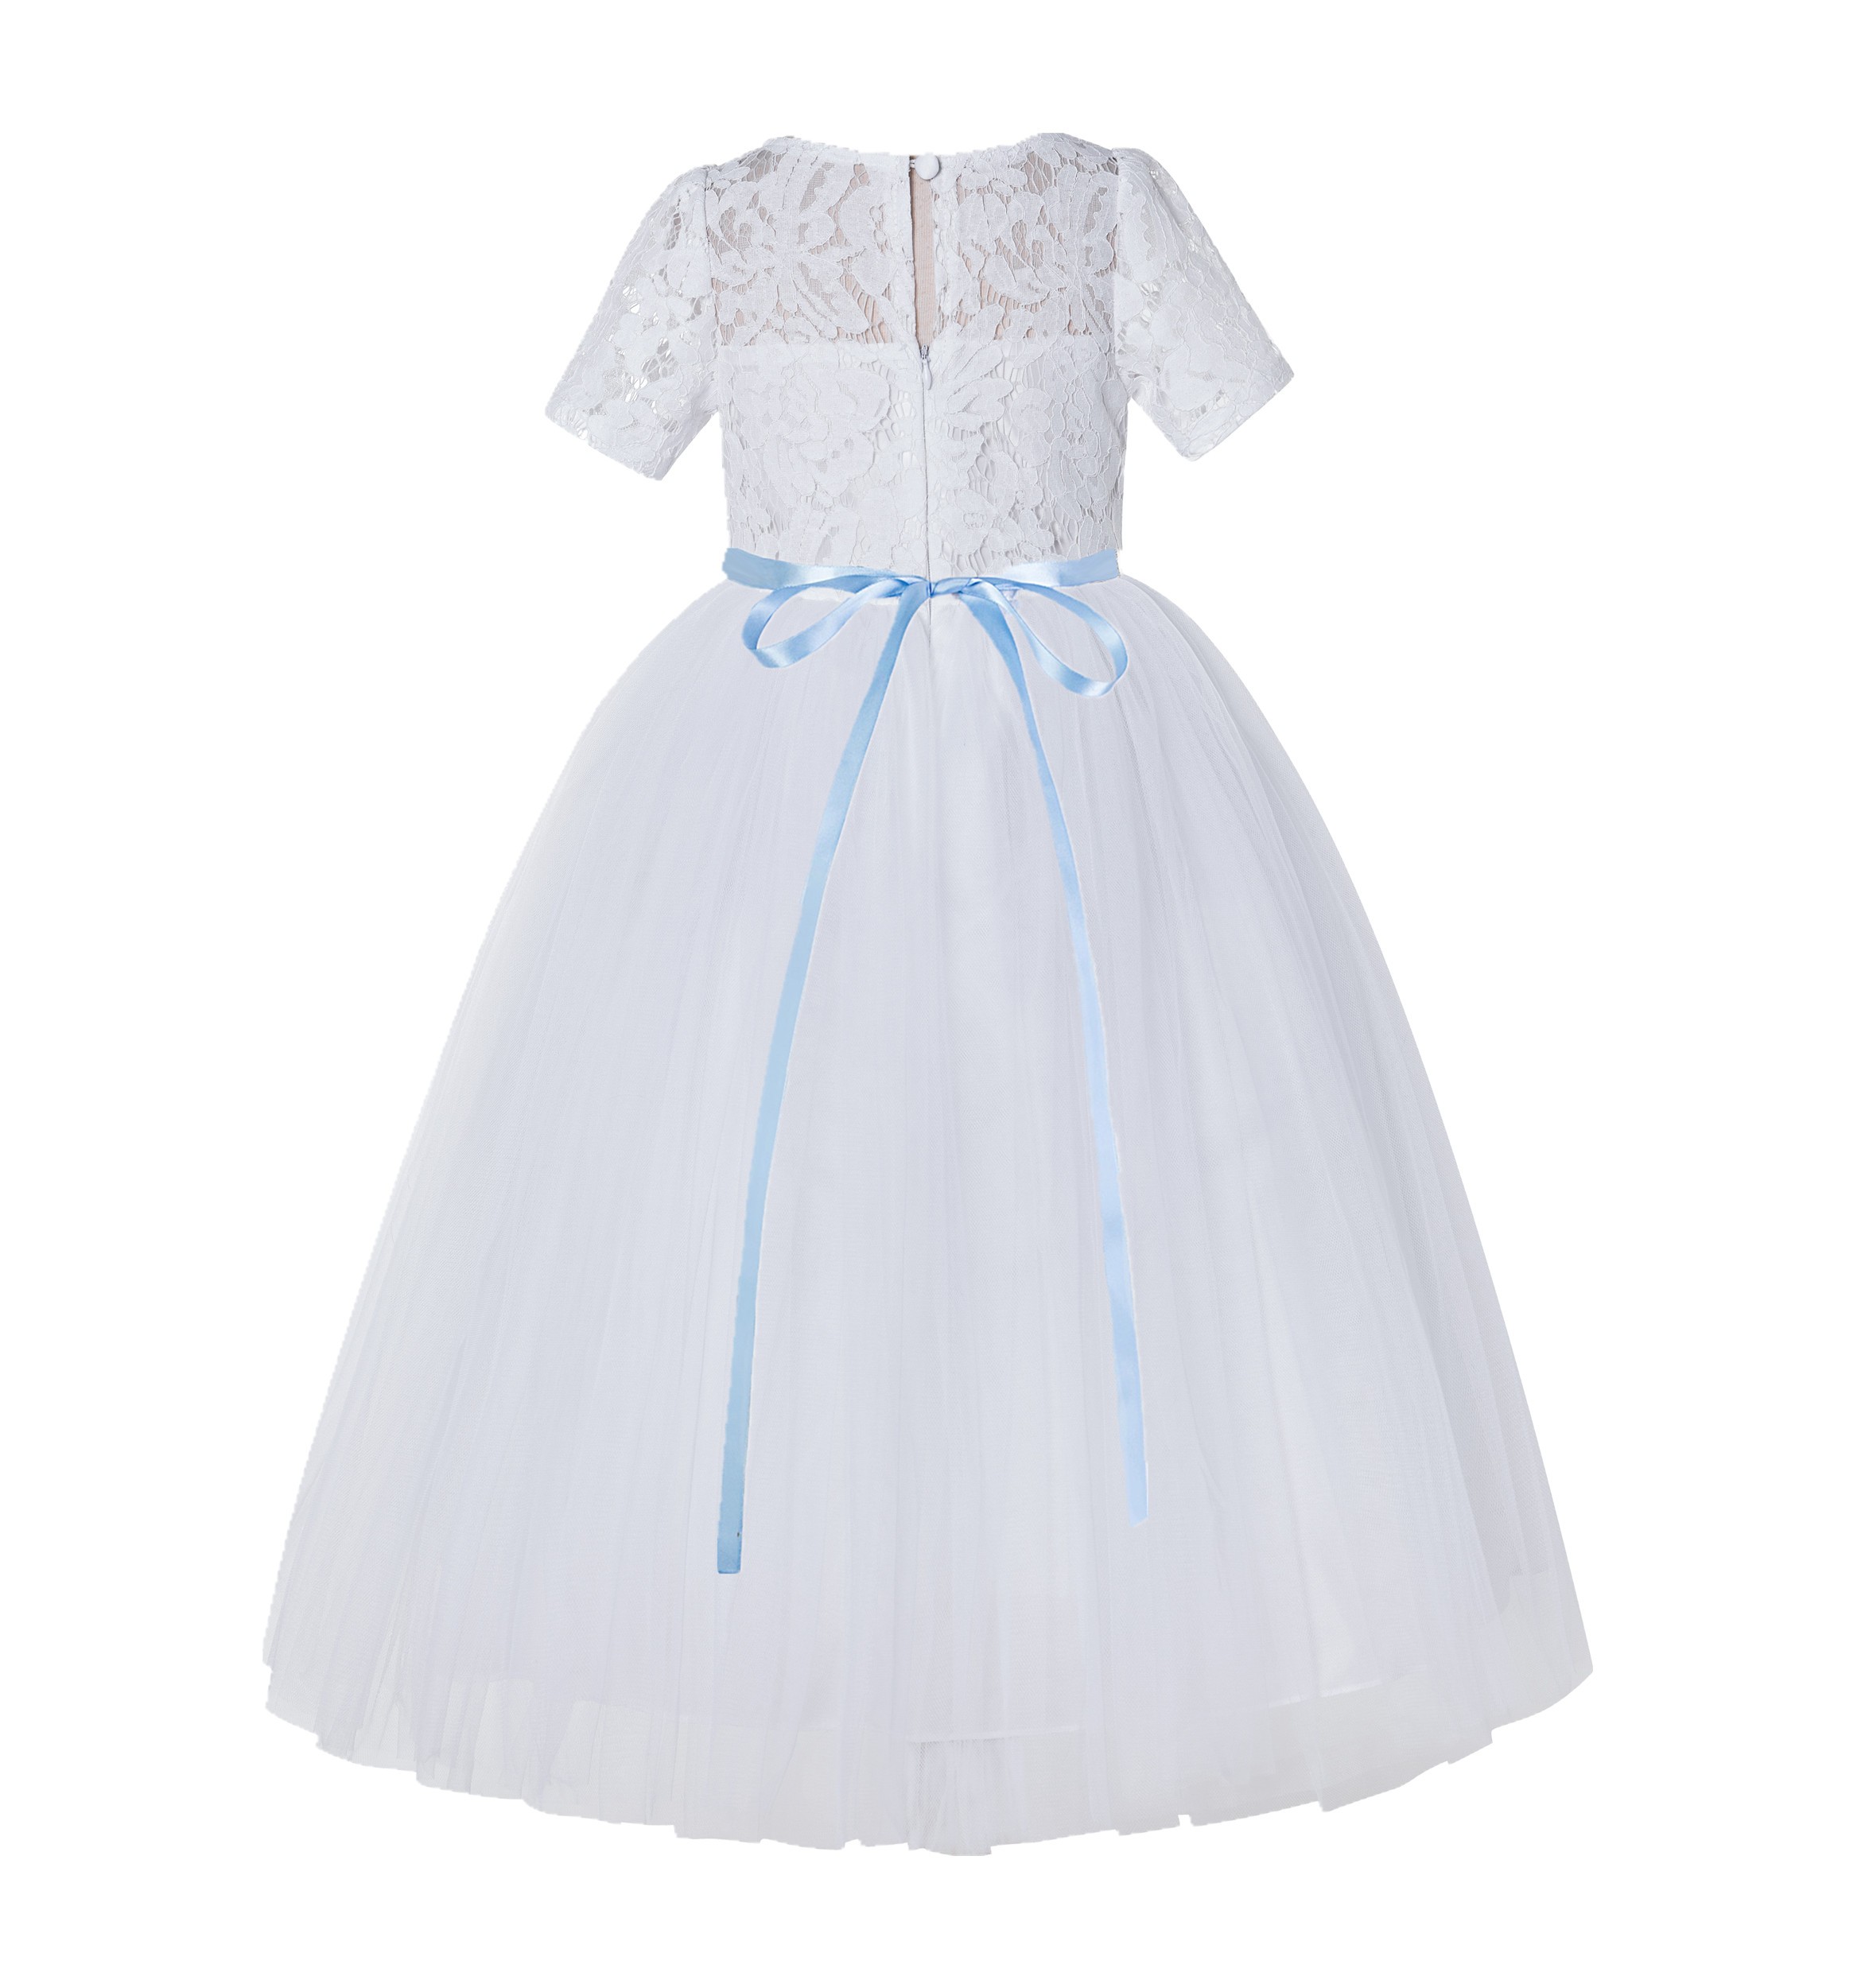 White / Dusty Blue Floral Lace Flower Girl Dress Baptism Dress LG2